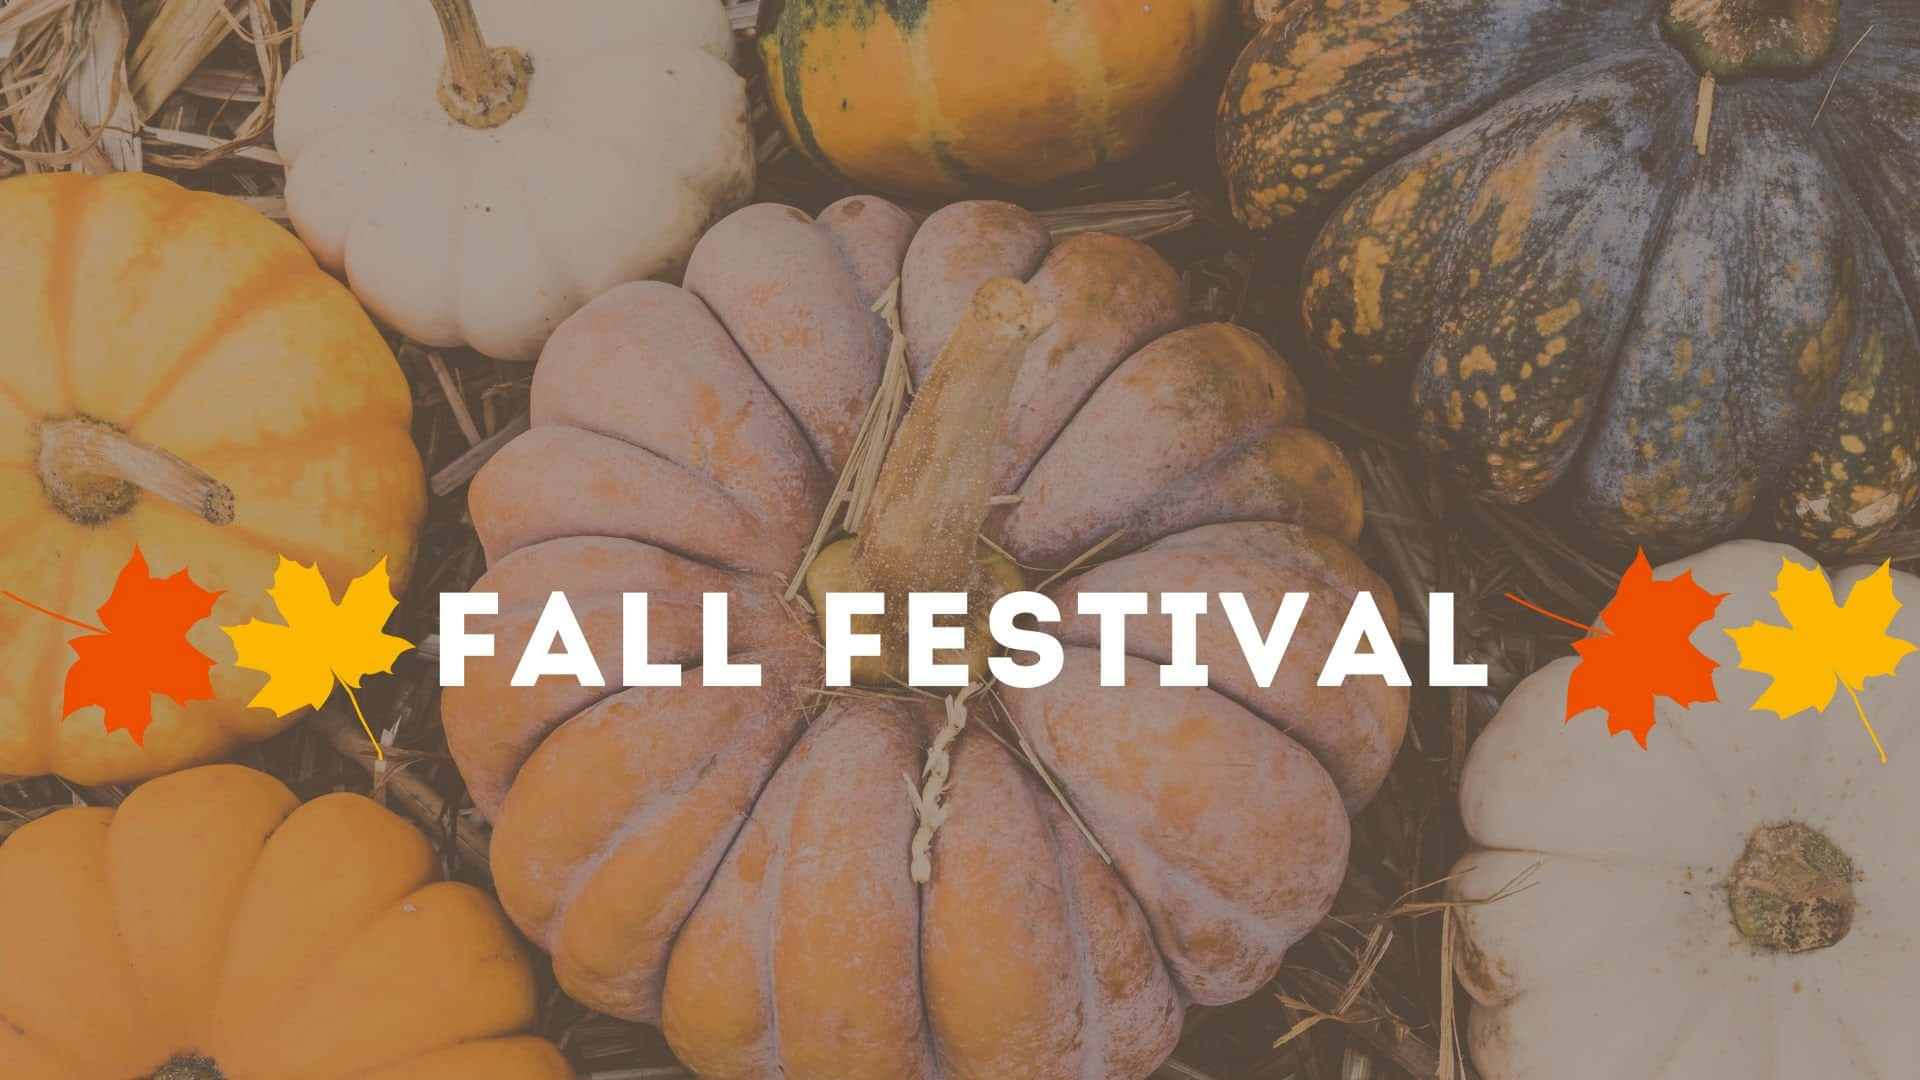 Fall Festival Wallpaper